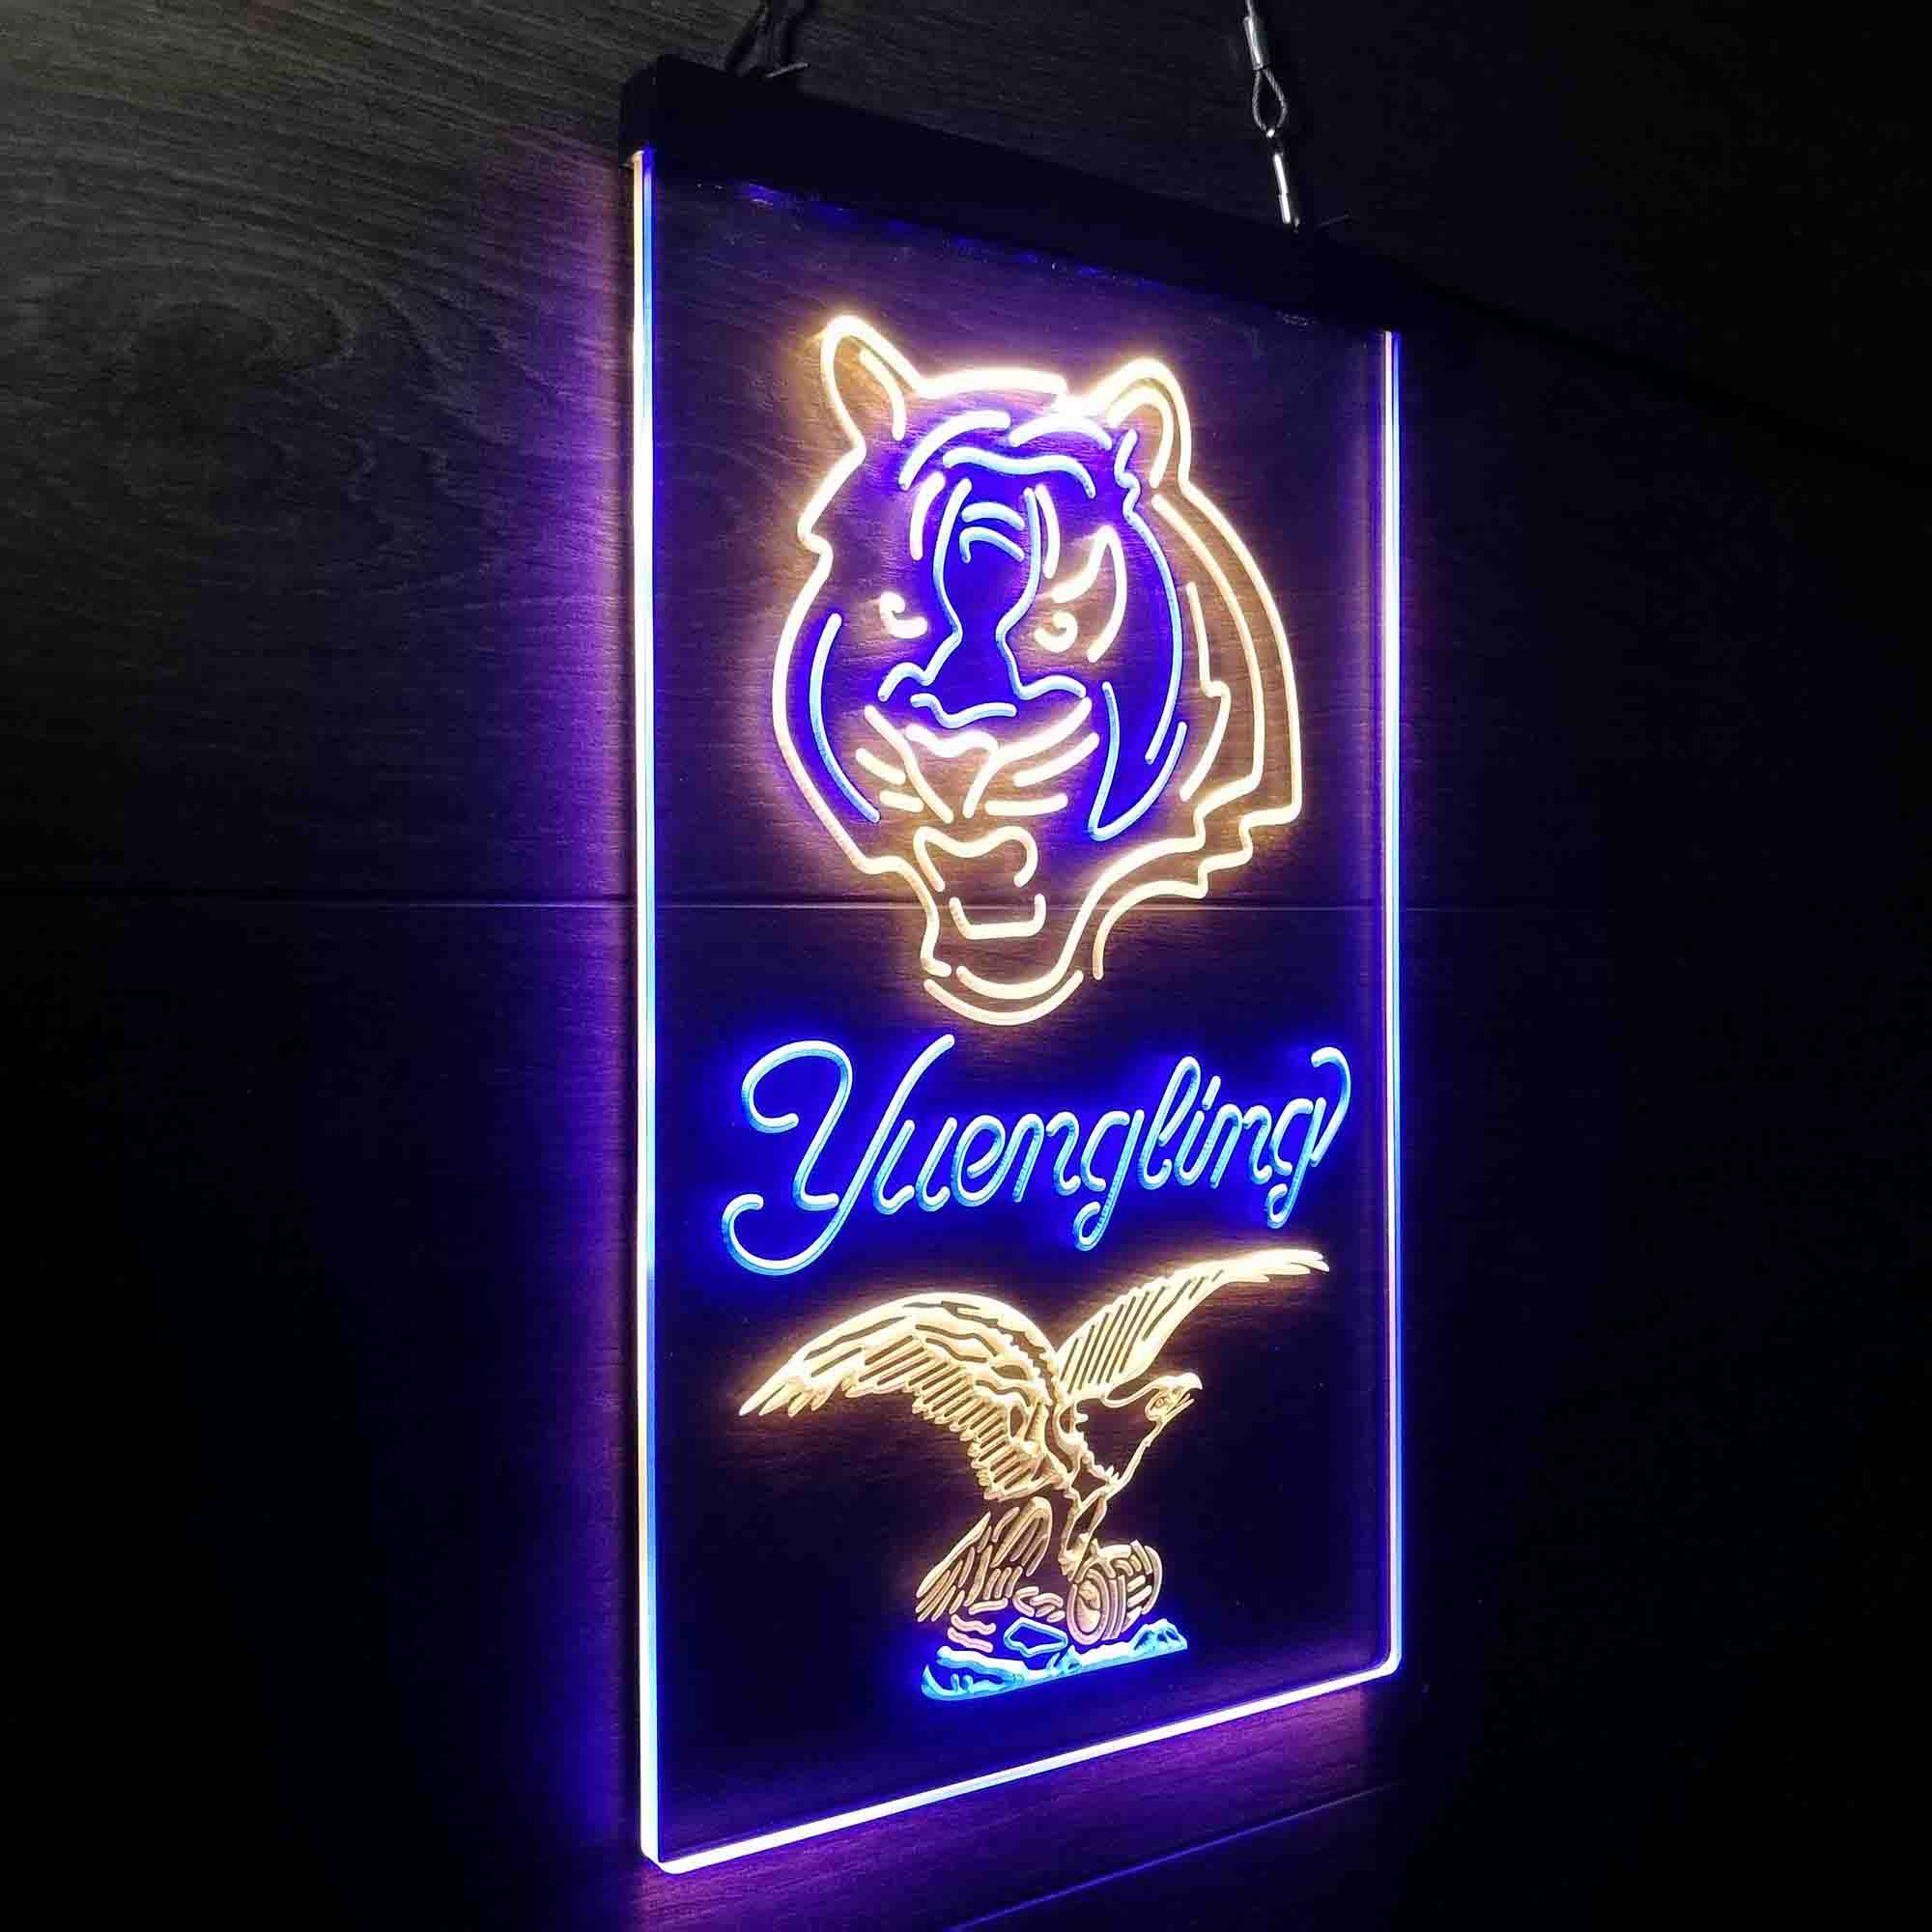 Yuengling Bar Cincinnati Bengals Est. 1968 LED Neon Sign